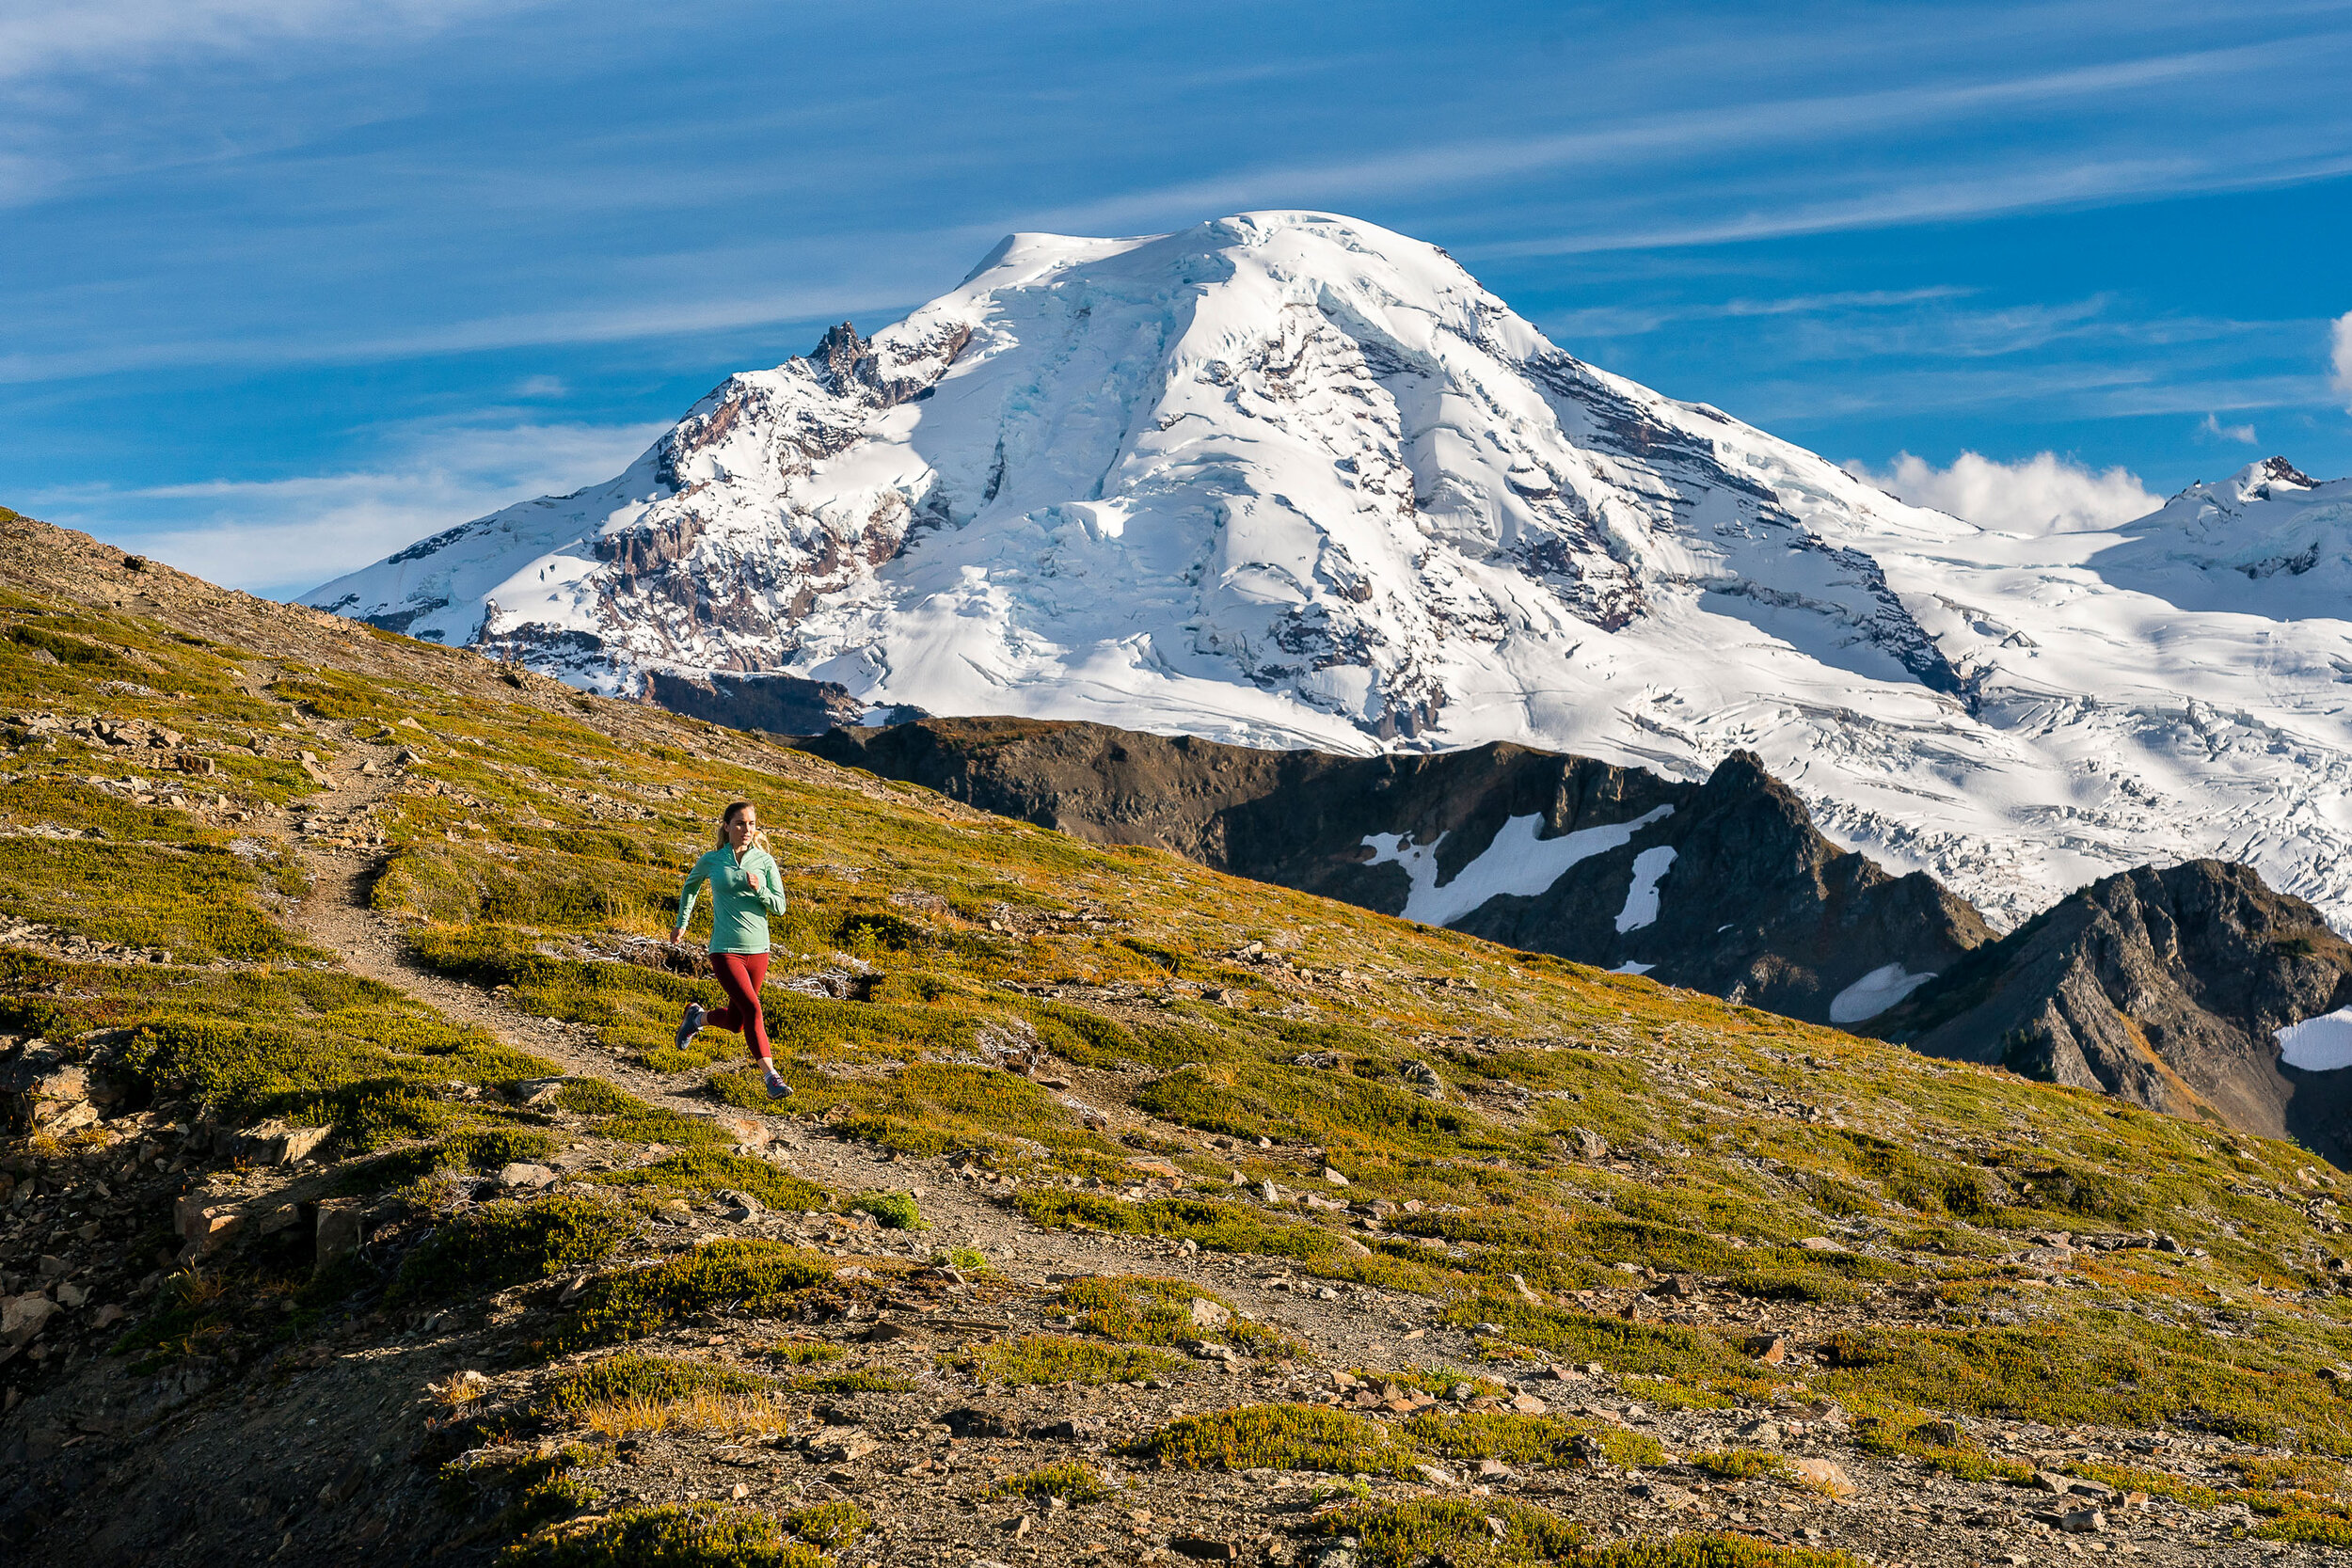  Adventure: Bronwyn Crossman trail running in the alpine beneath Mt. Baker, Washington 